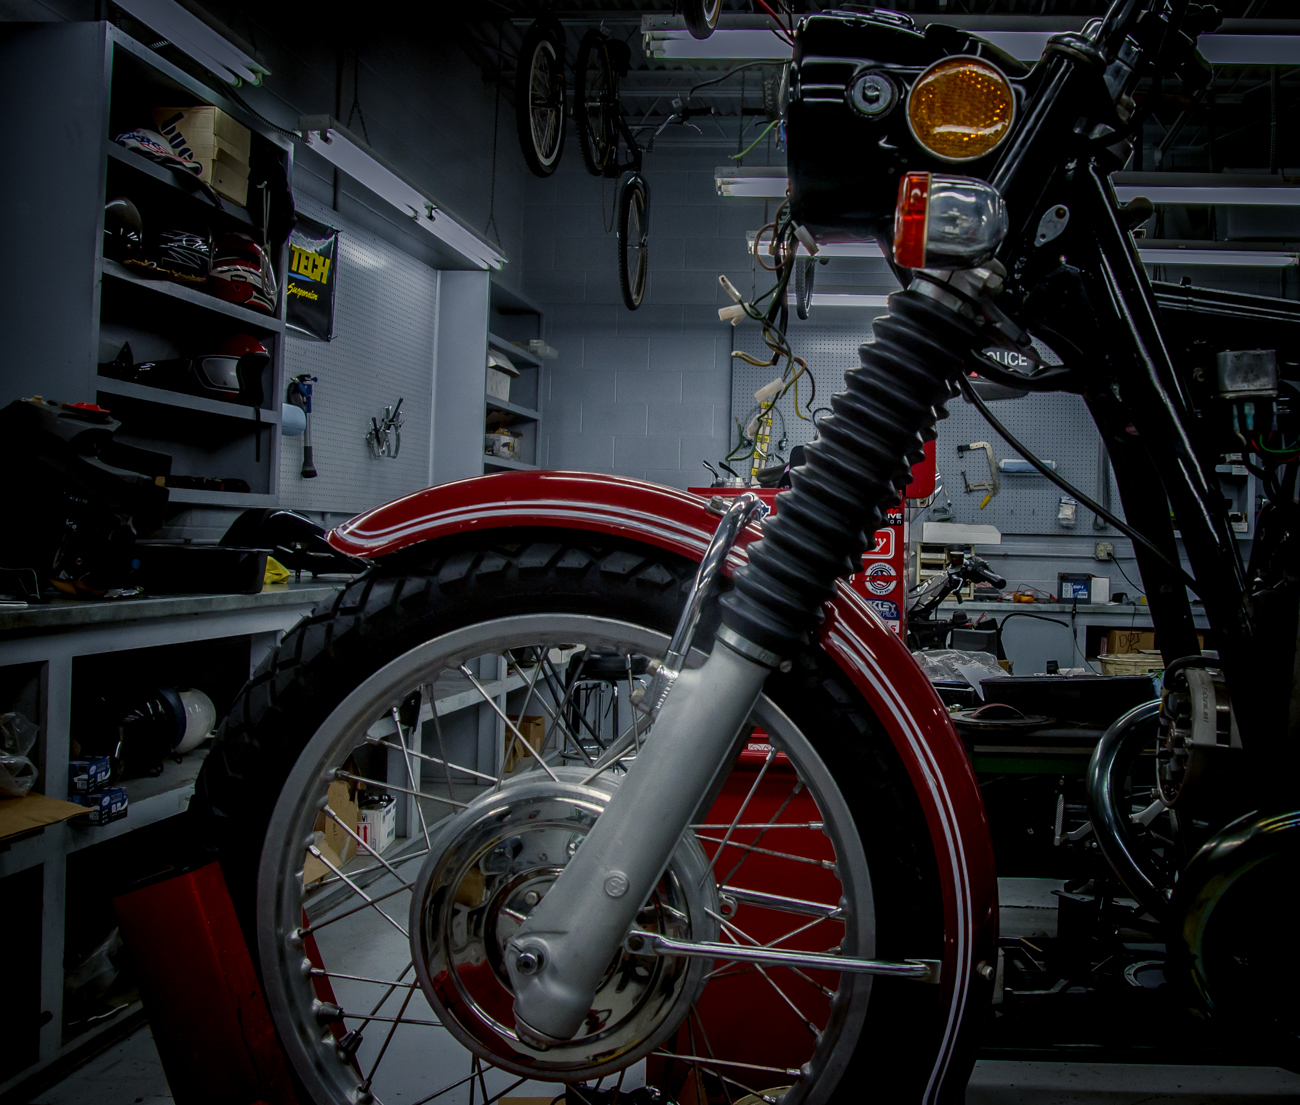 suspension upgrade atx moto set 4 job done-1.jpg